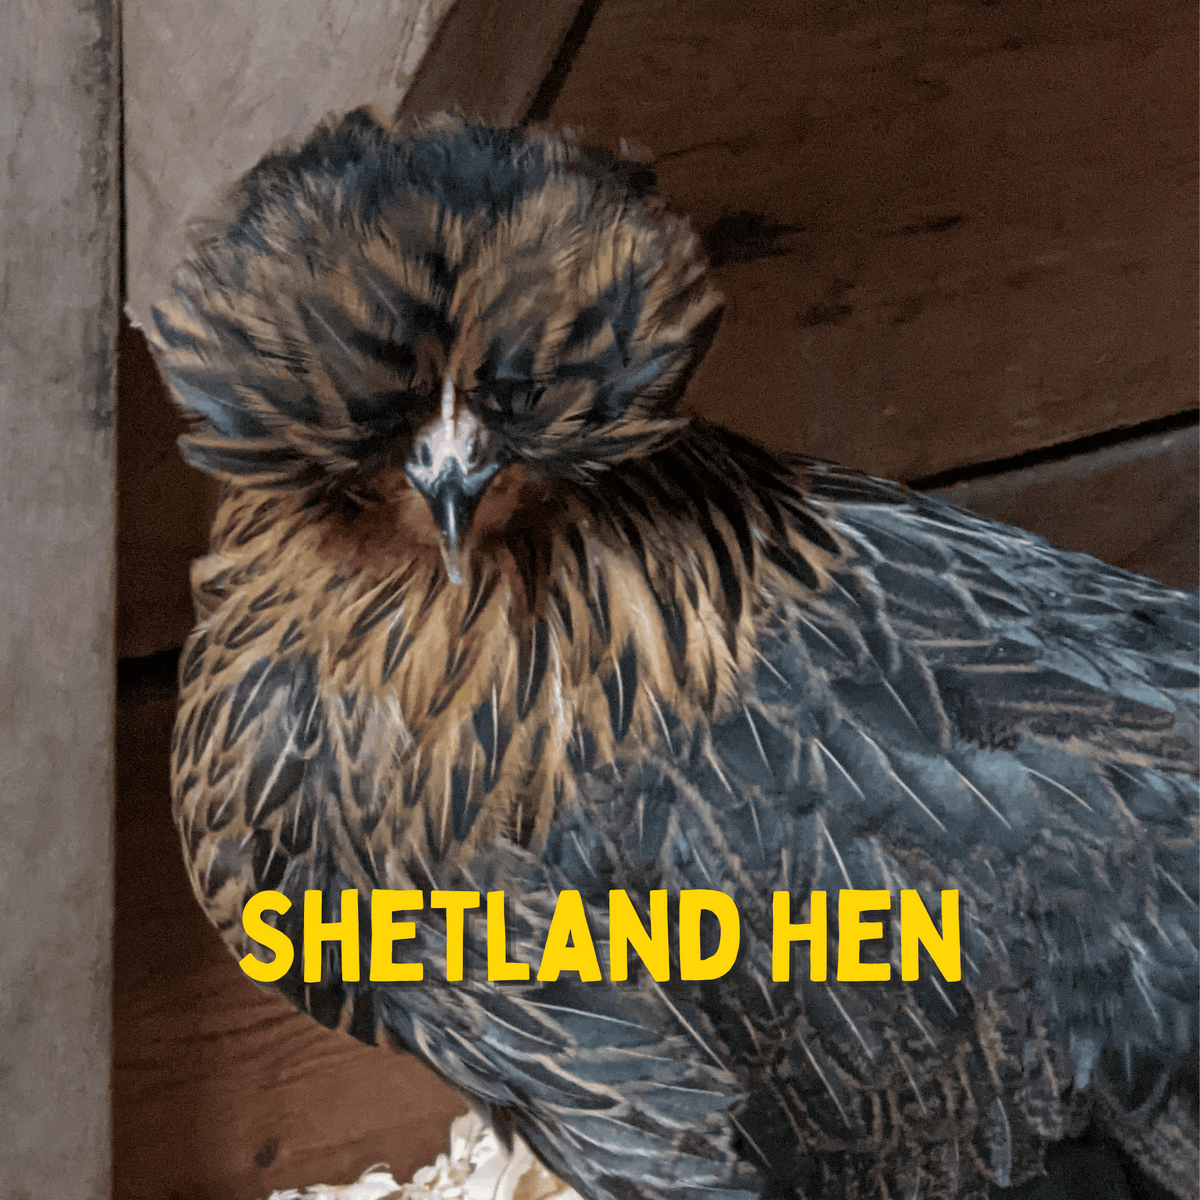 Shetland Hen Chicken Hatching Eggs